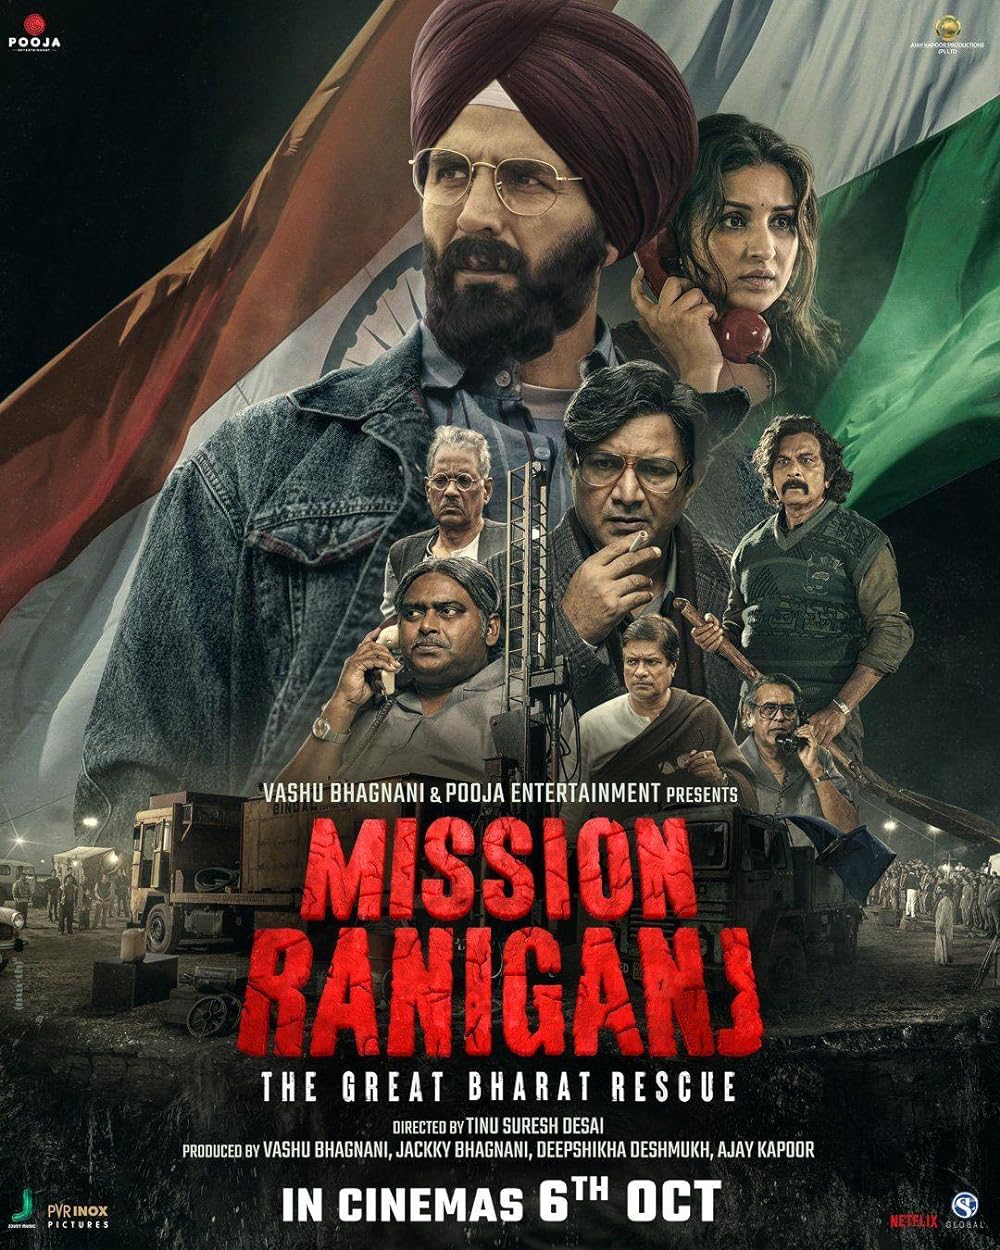 Mission Raniganj (December 1) - NetflixFollowing its theatrical run in October, 